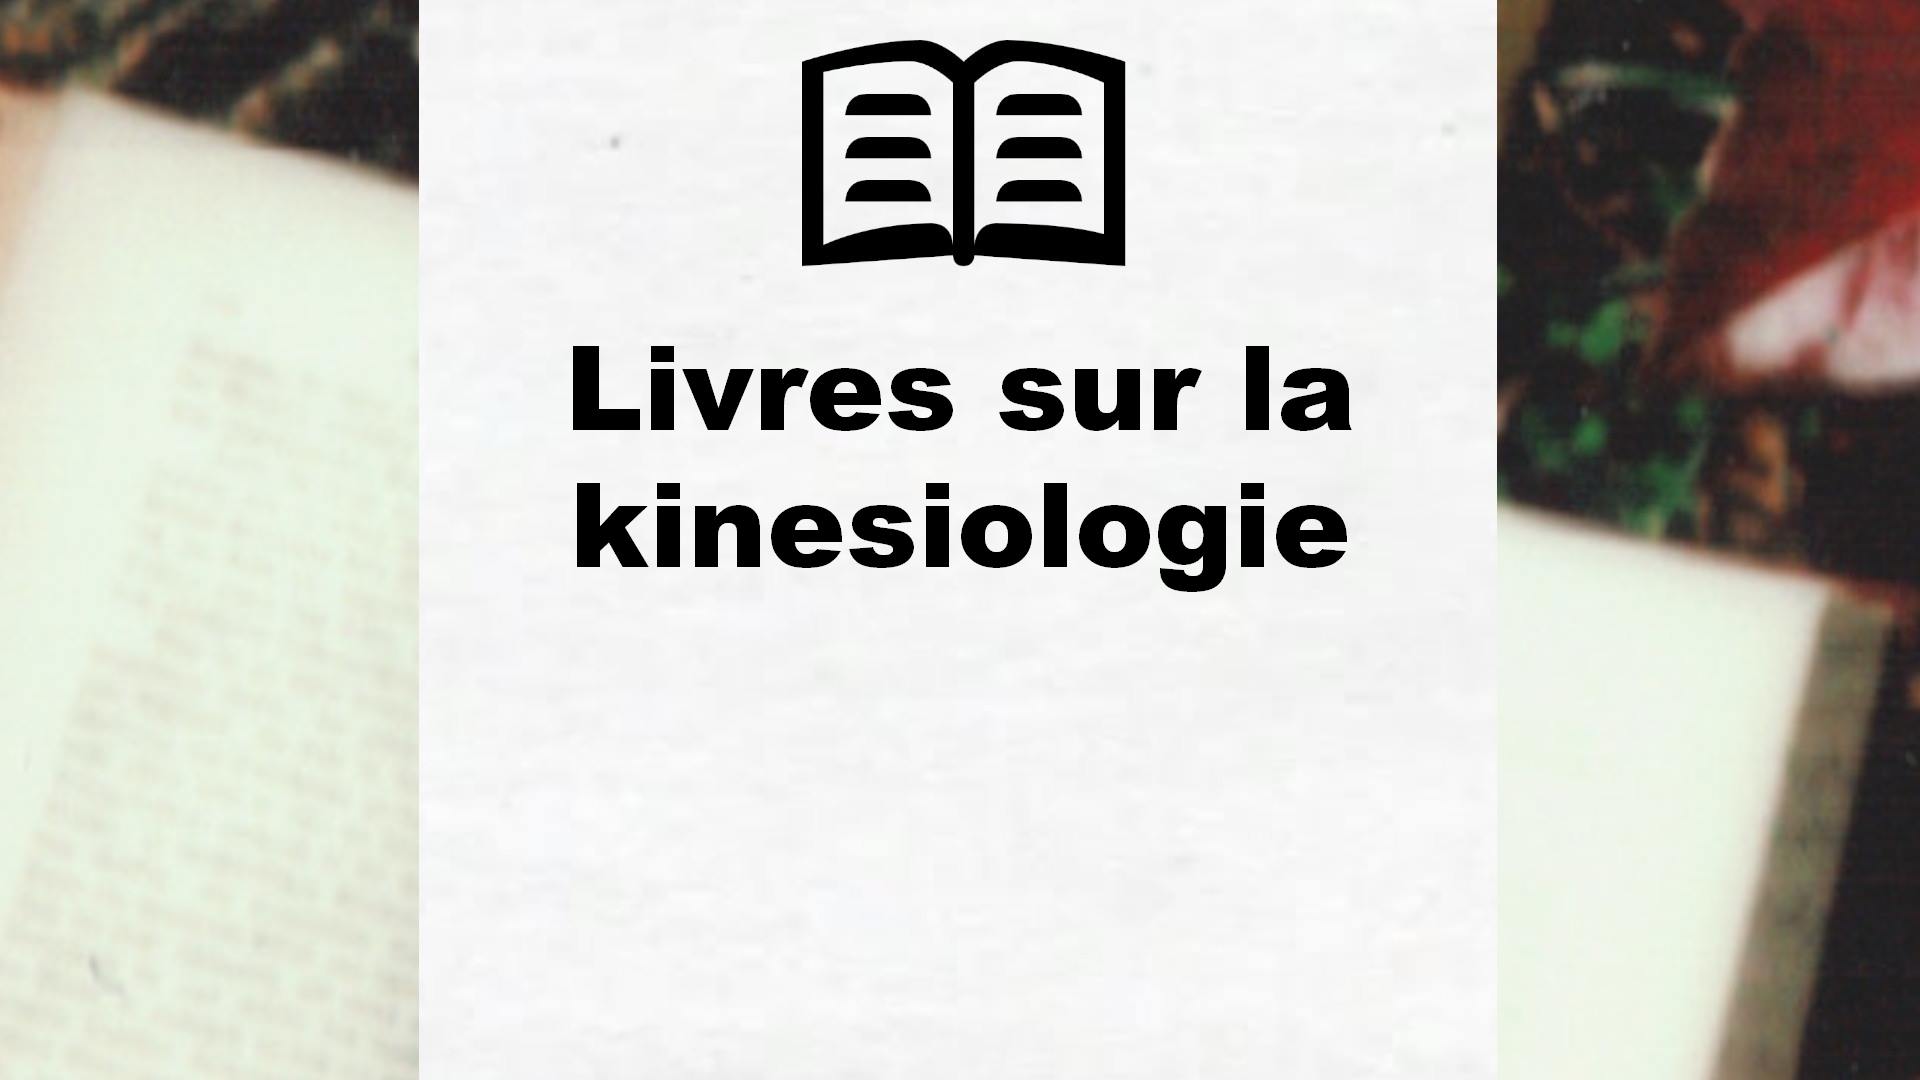 Livres sur la kinesiologie